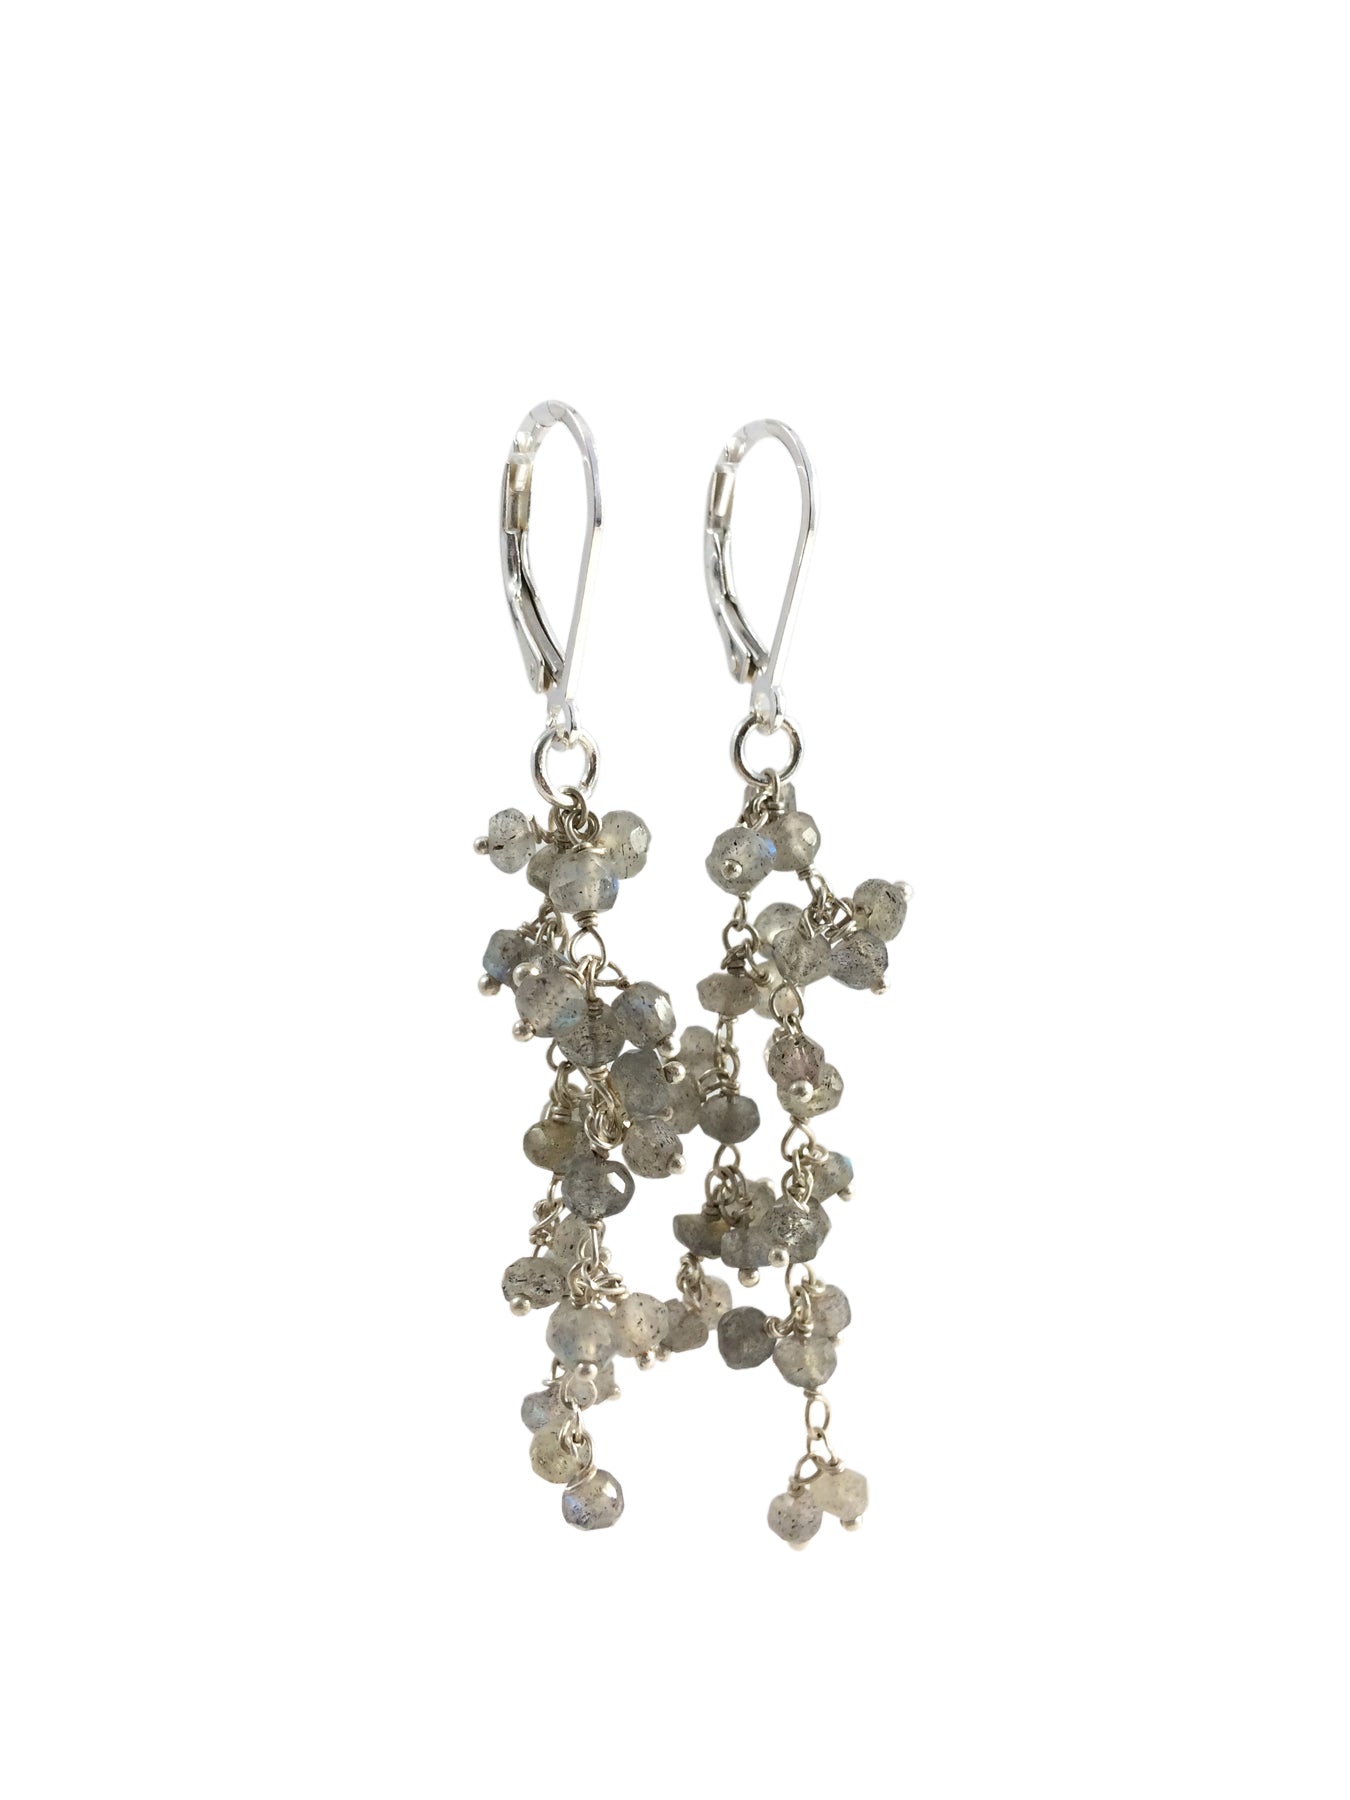 Cream Labradorite & Sterling Silver Dangle Earrings